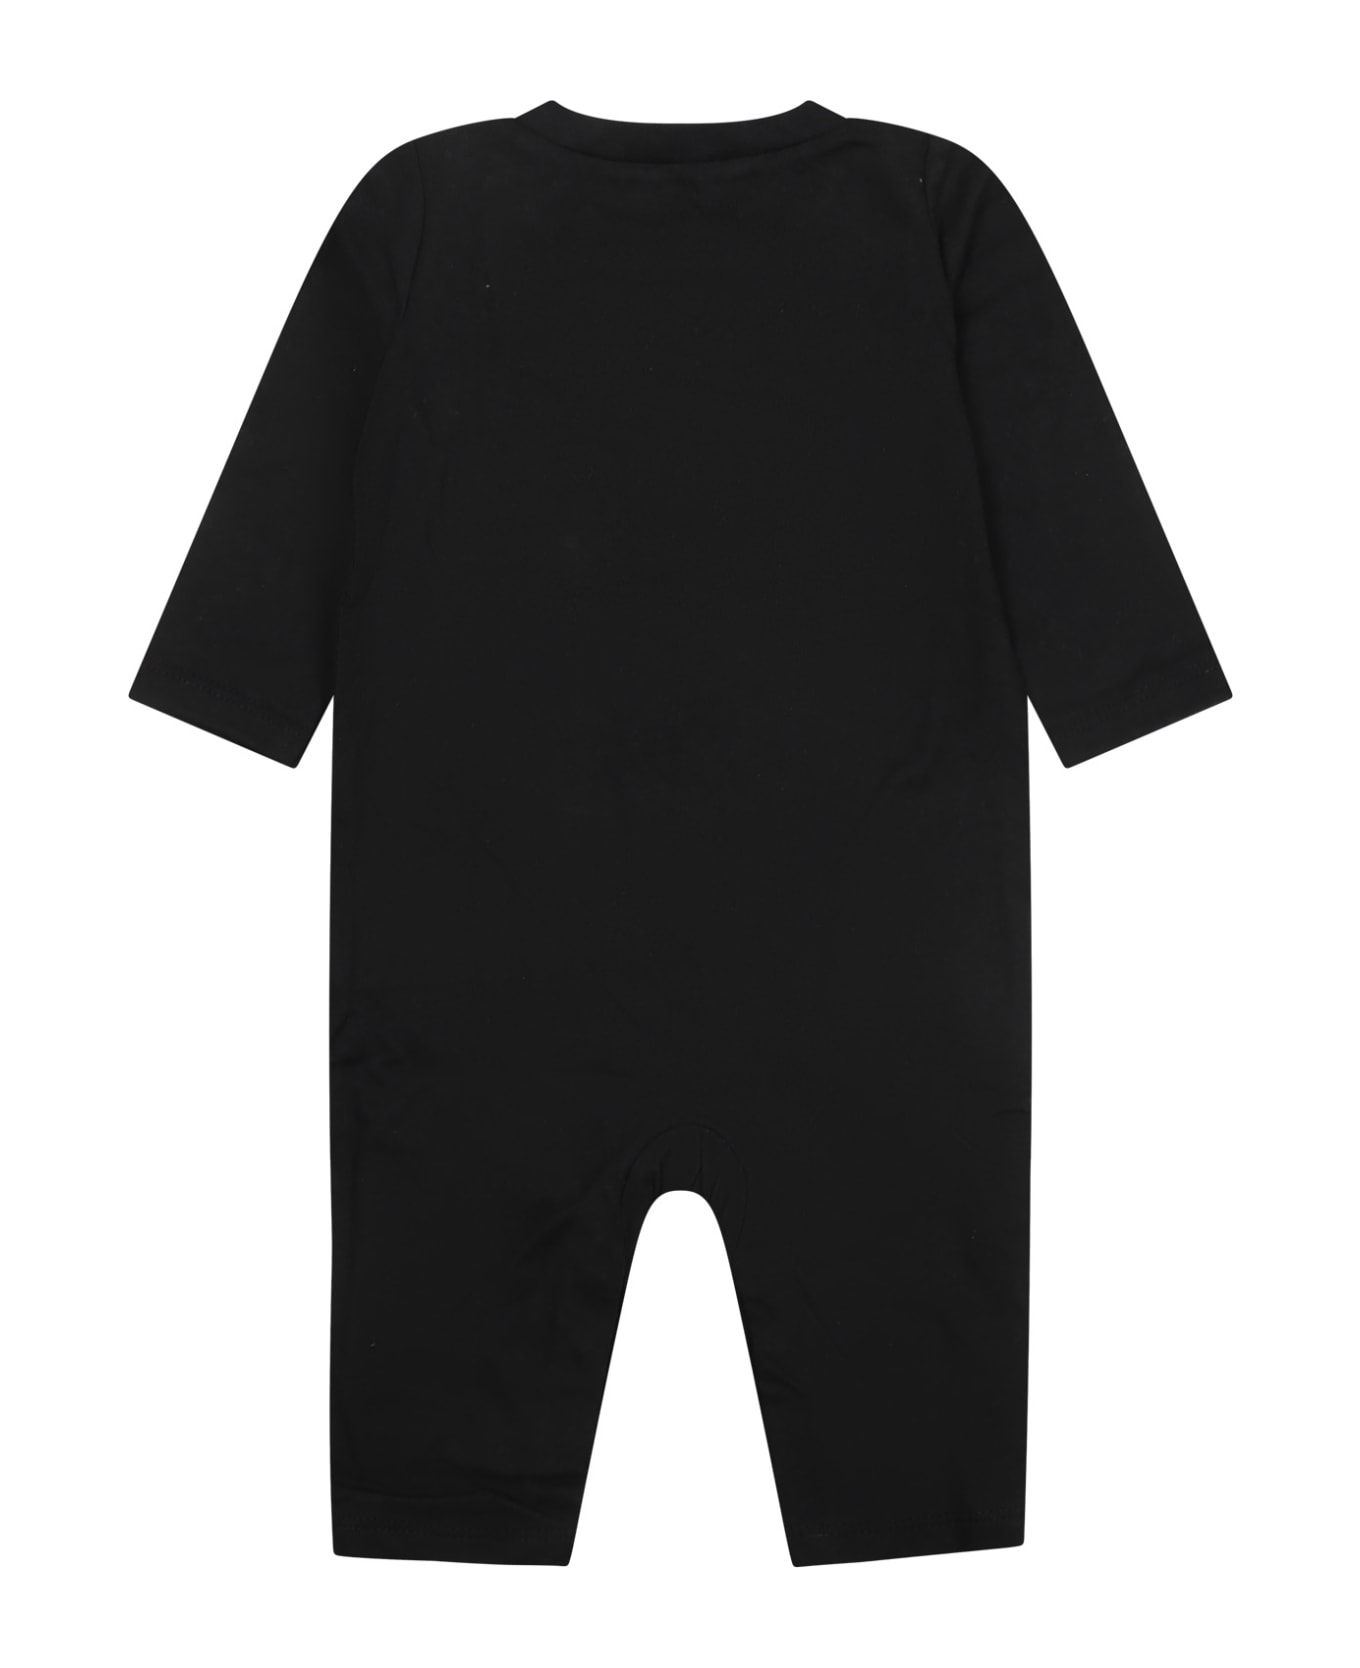 Nike Black Babygrow For Baby Boy With Swoosh - Black ボディスーツ＆セットアップ